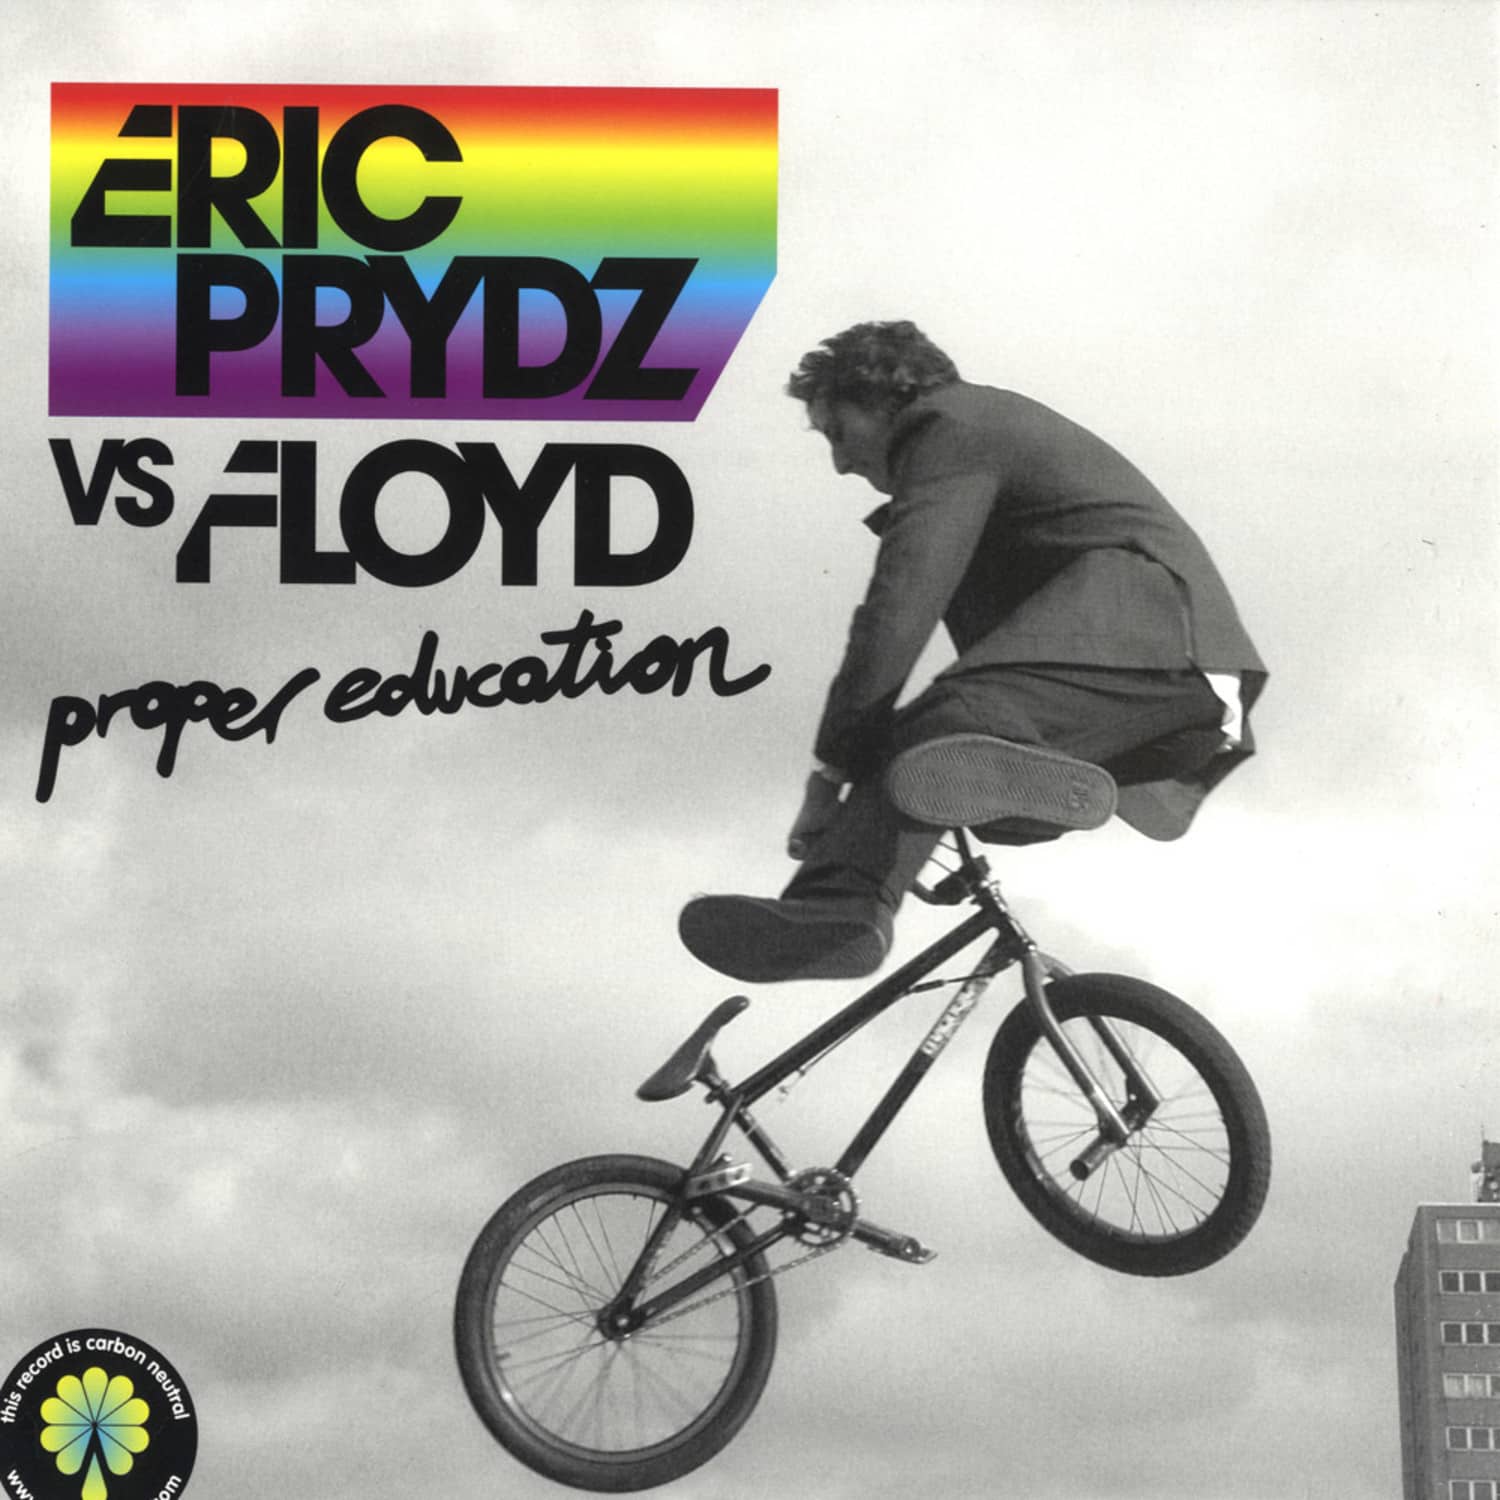 Eric Prydz vs Floyd - PROPER EDUCATION 